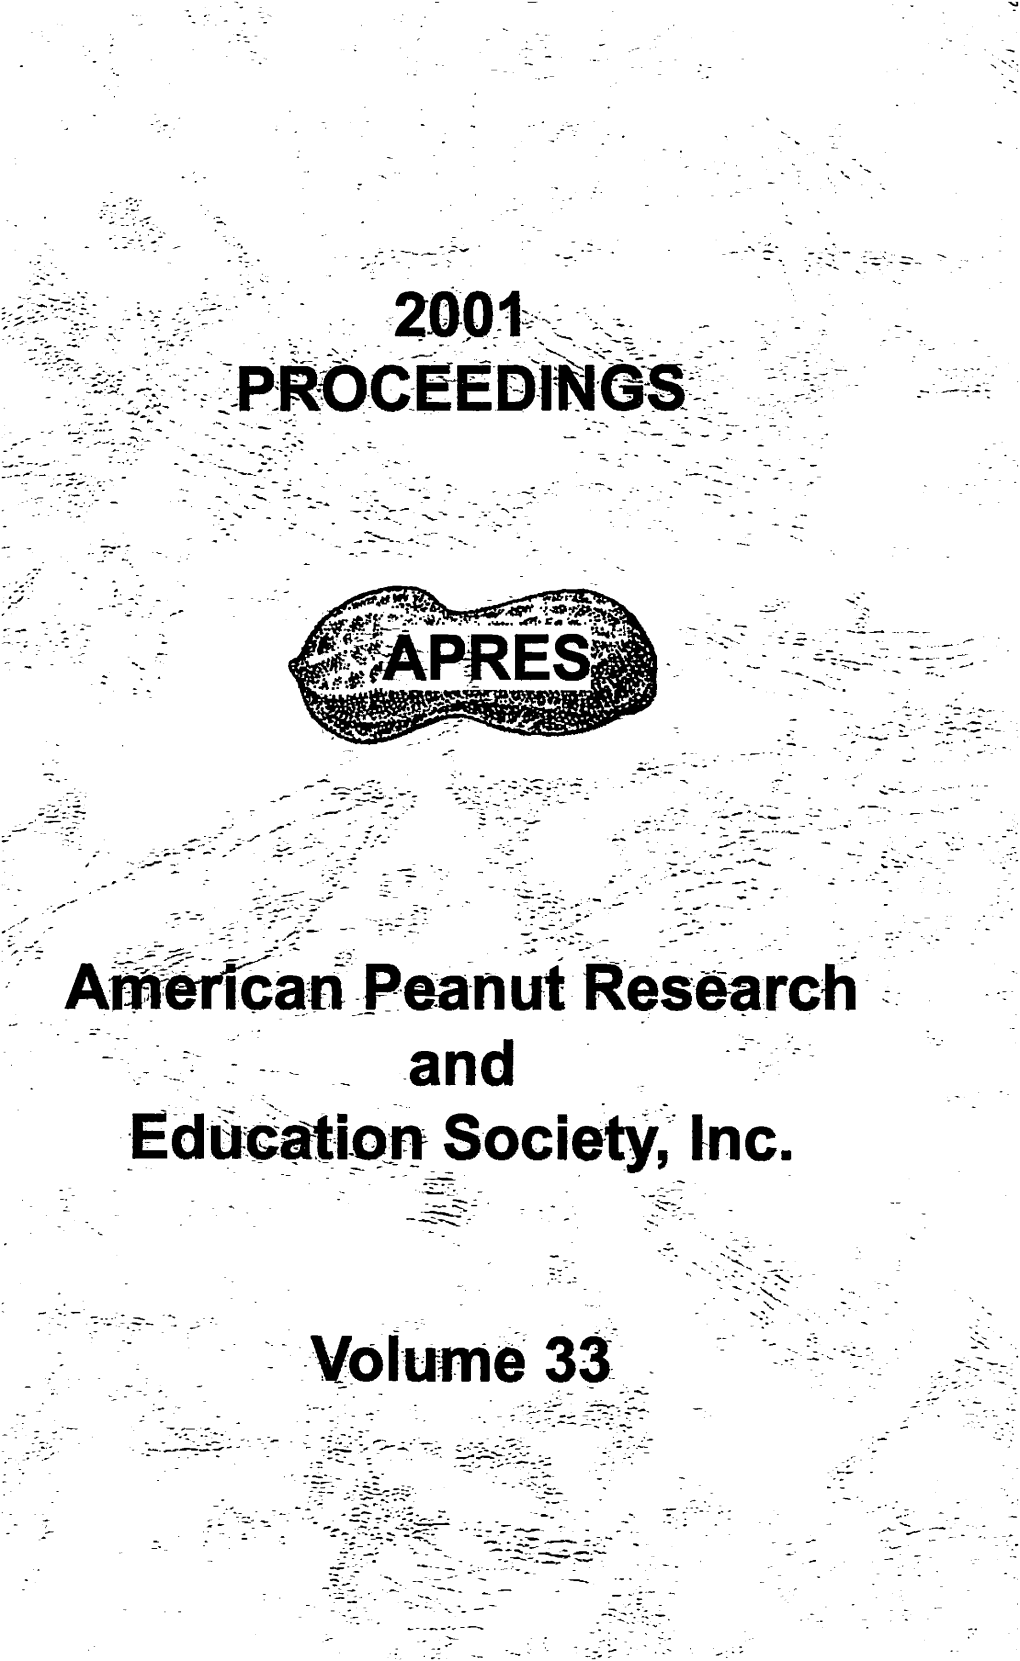 Volume 33 — 2001 APRES Proceedings, Oklahoma City, OK